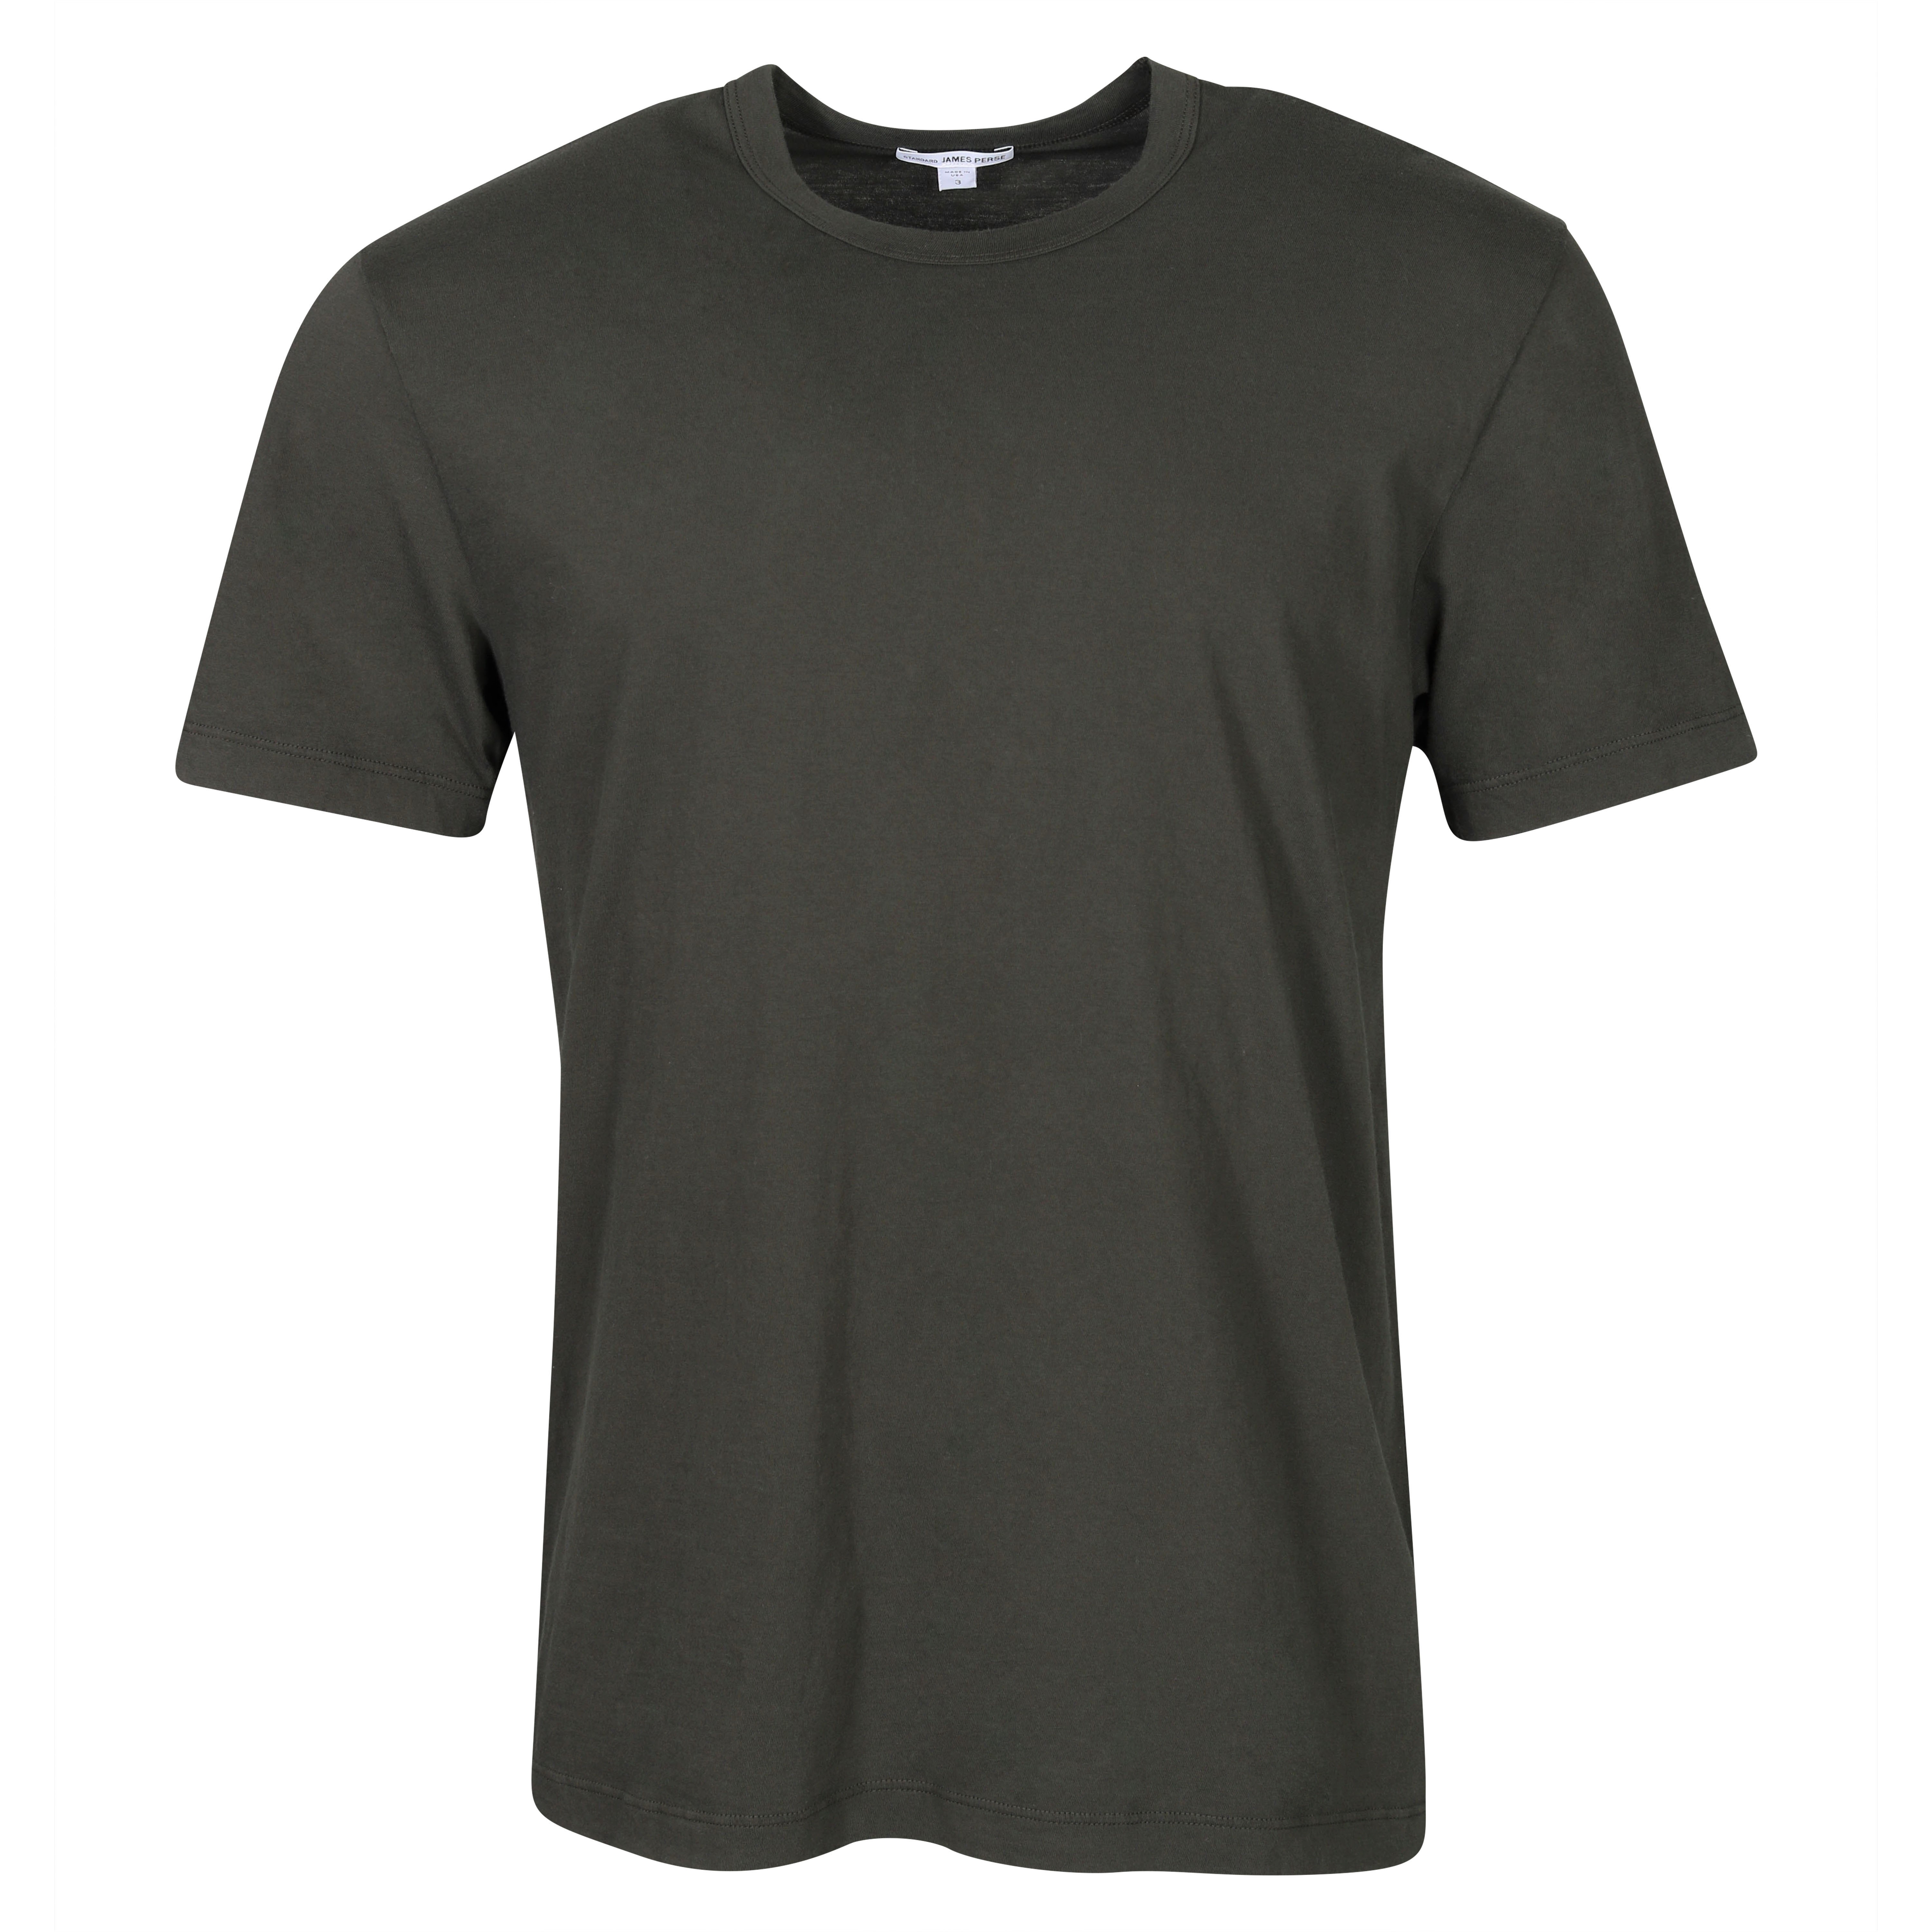 James Perse T-Shirt Crewneck in Dark Olive